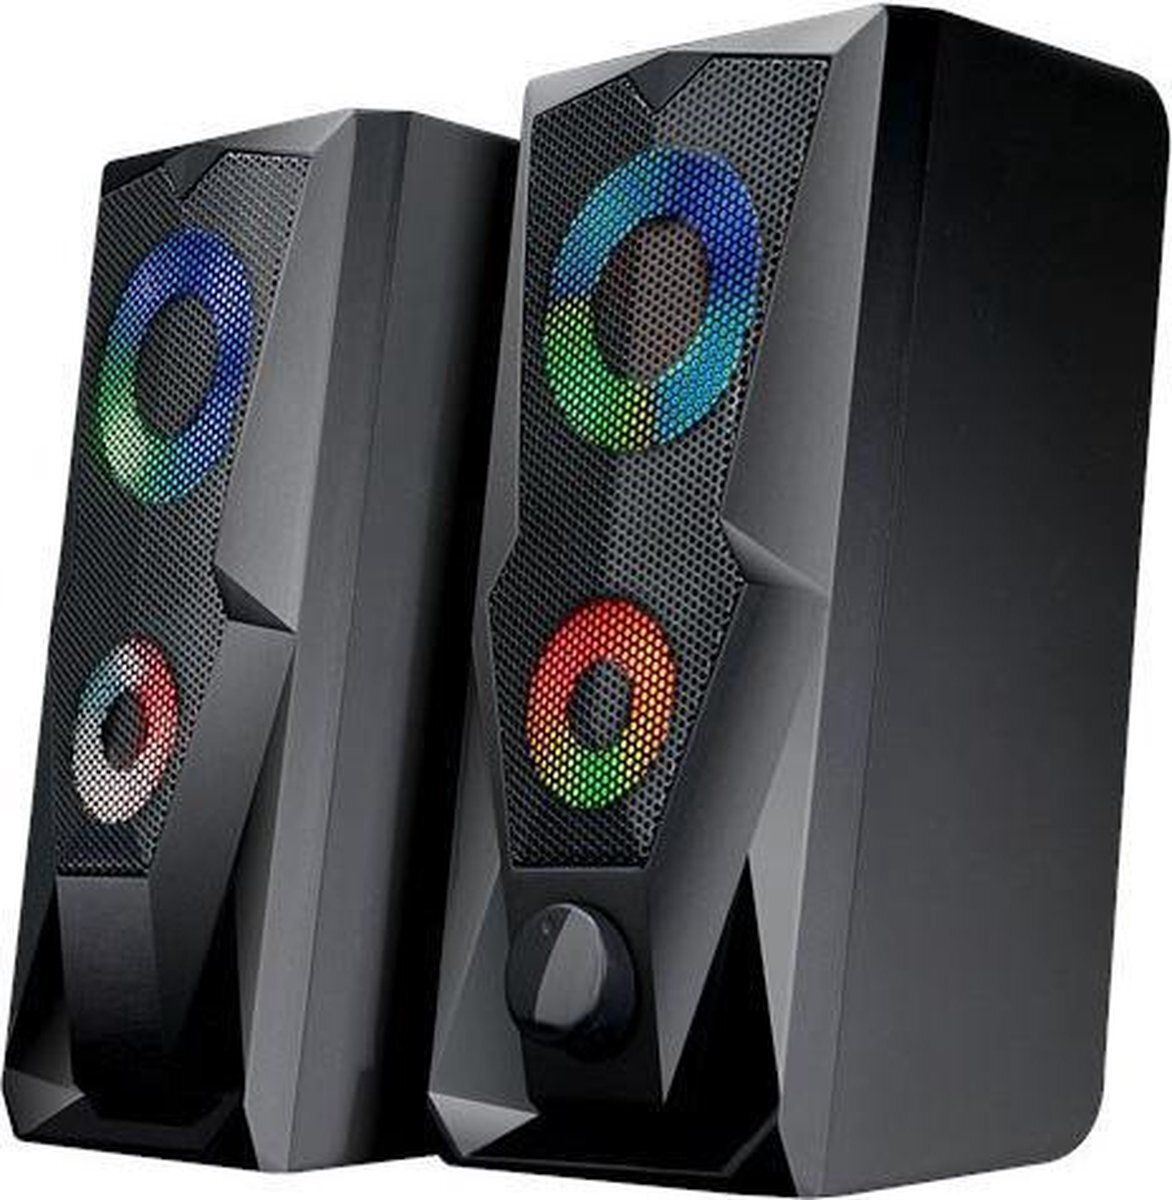 battletron Gaming Boxen - Speakers met LED - 7 Kleuren LED - Usb aansluiting Jacks - Inclusief kabels pc-speaker kopen? | Kieskeurig.nl | helpt je kiezen